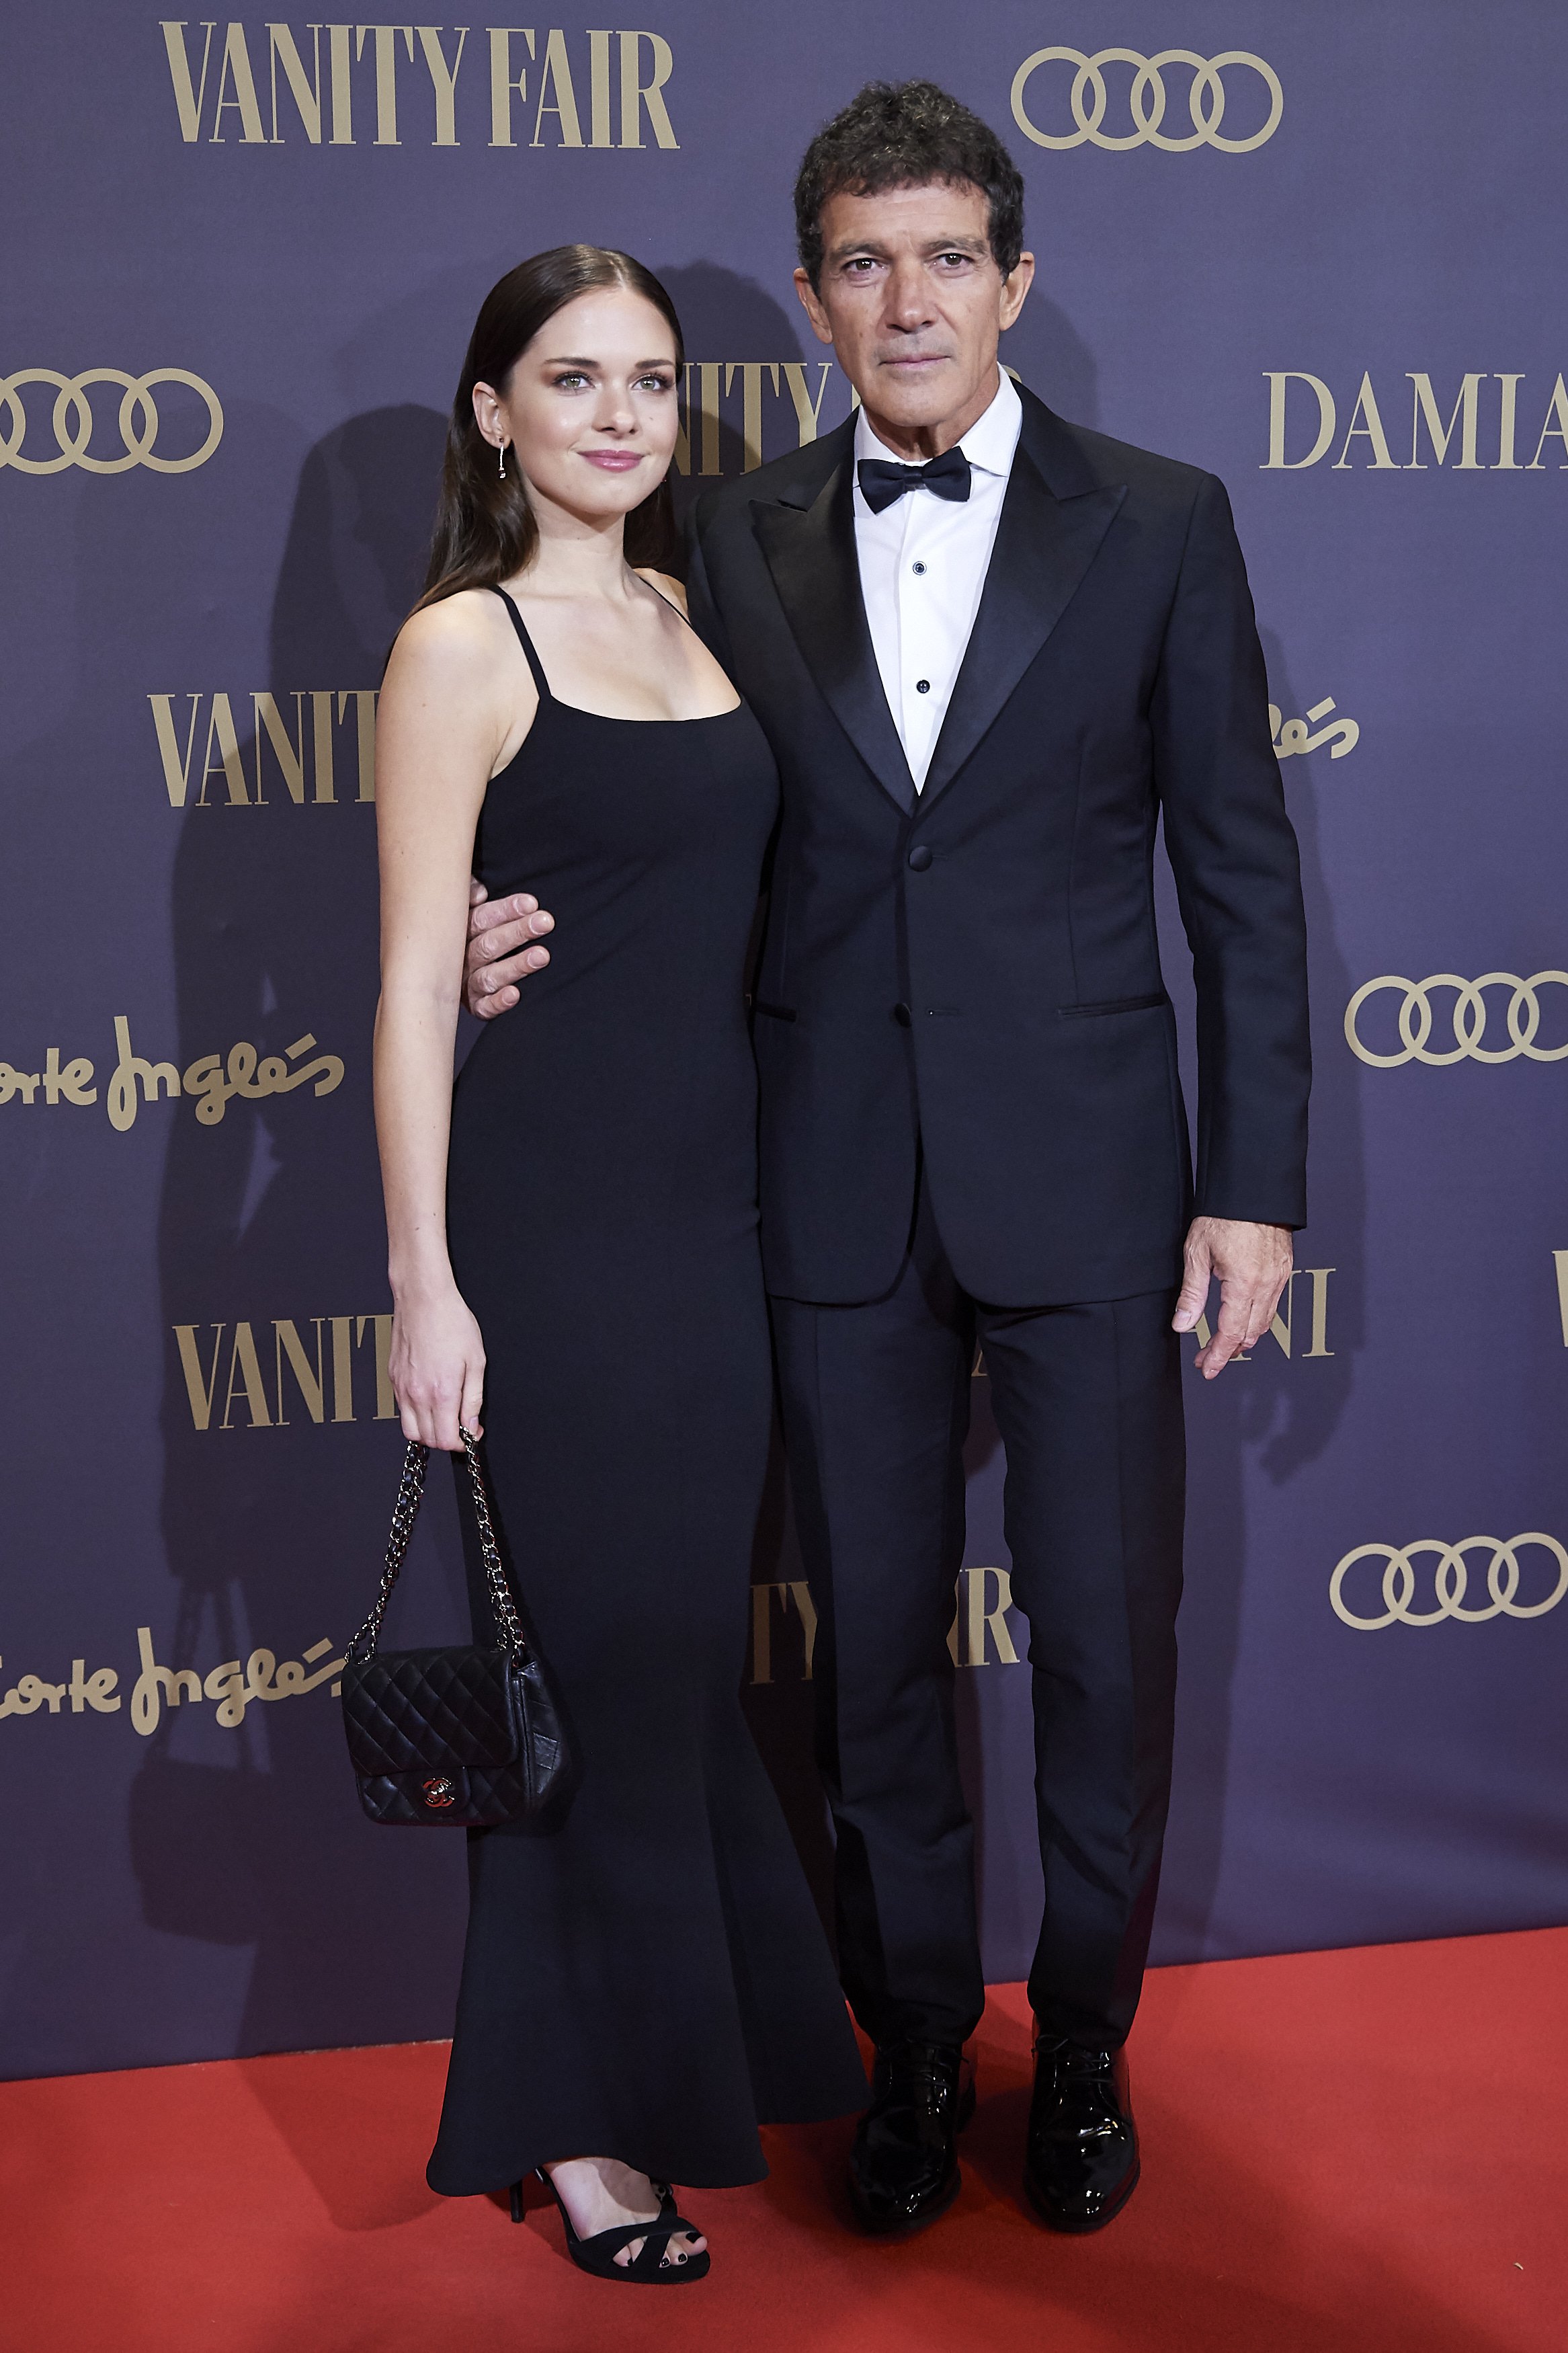 Stella del Carmen Banderas and Antonio Banderas attend the Vanity Fair Awards in Madrid, Spain on November 25, 2019 | Photo: Getty Images